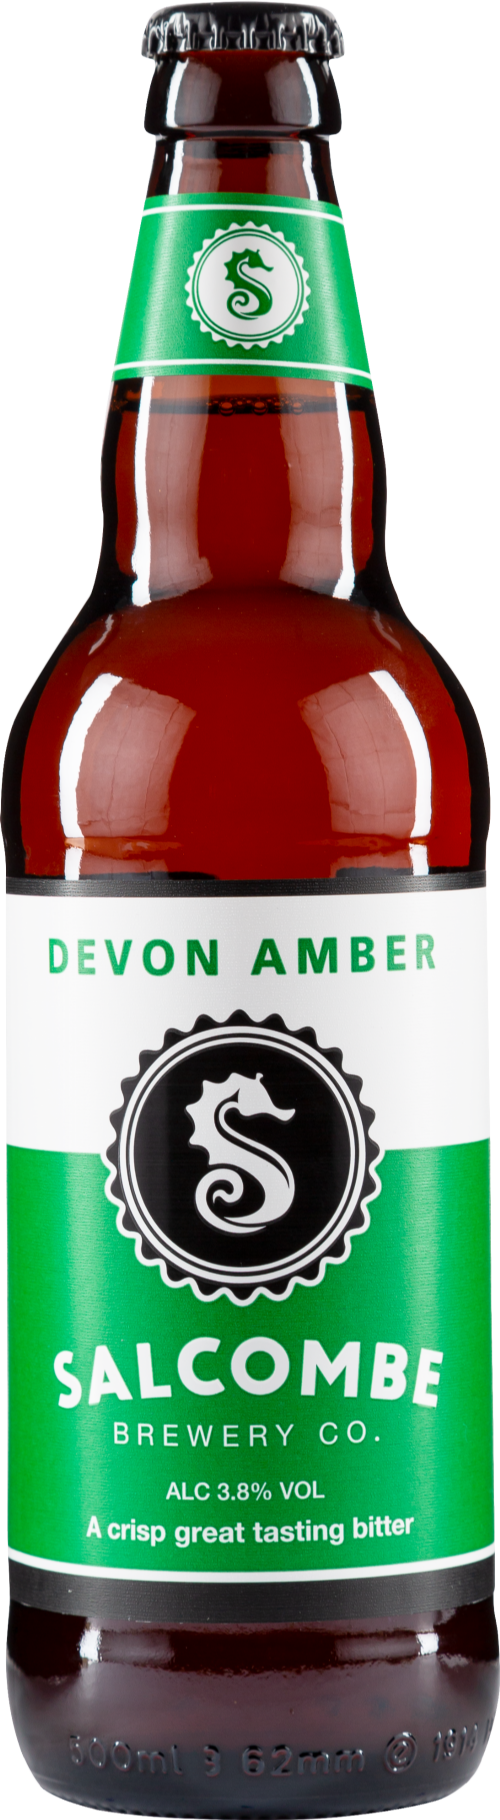 SALCOMBE BREWERY CO. Devon Amber 3.8% ABV 50cl